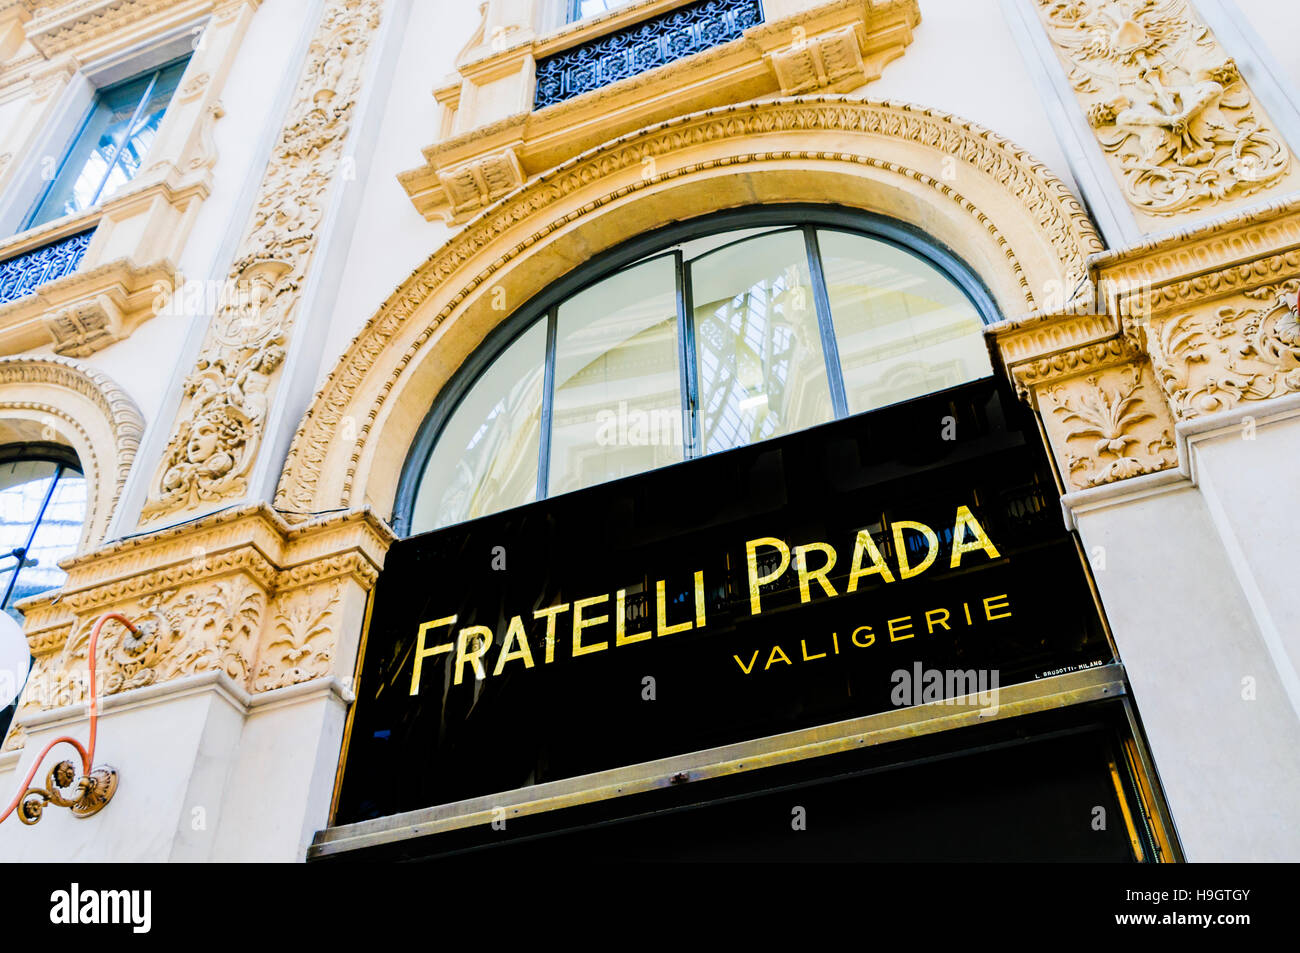 Fratelli Prada shop in Galleria Vittorio Emanuele II, a shopping arcade specialising in designer clothing, Milan, Italy. Stock Photo